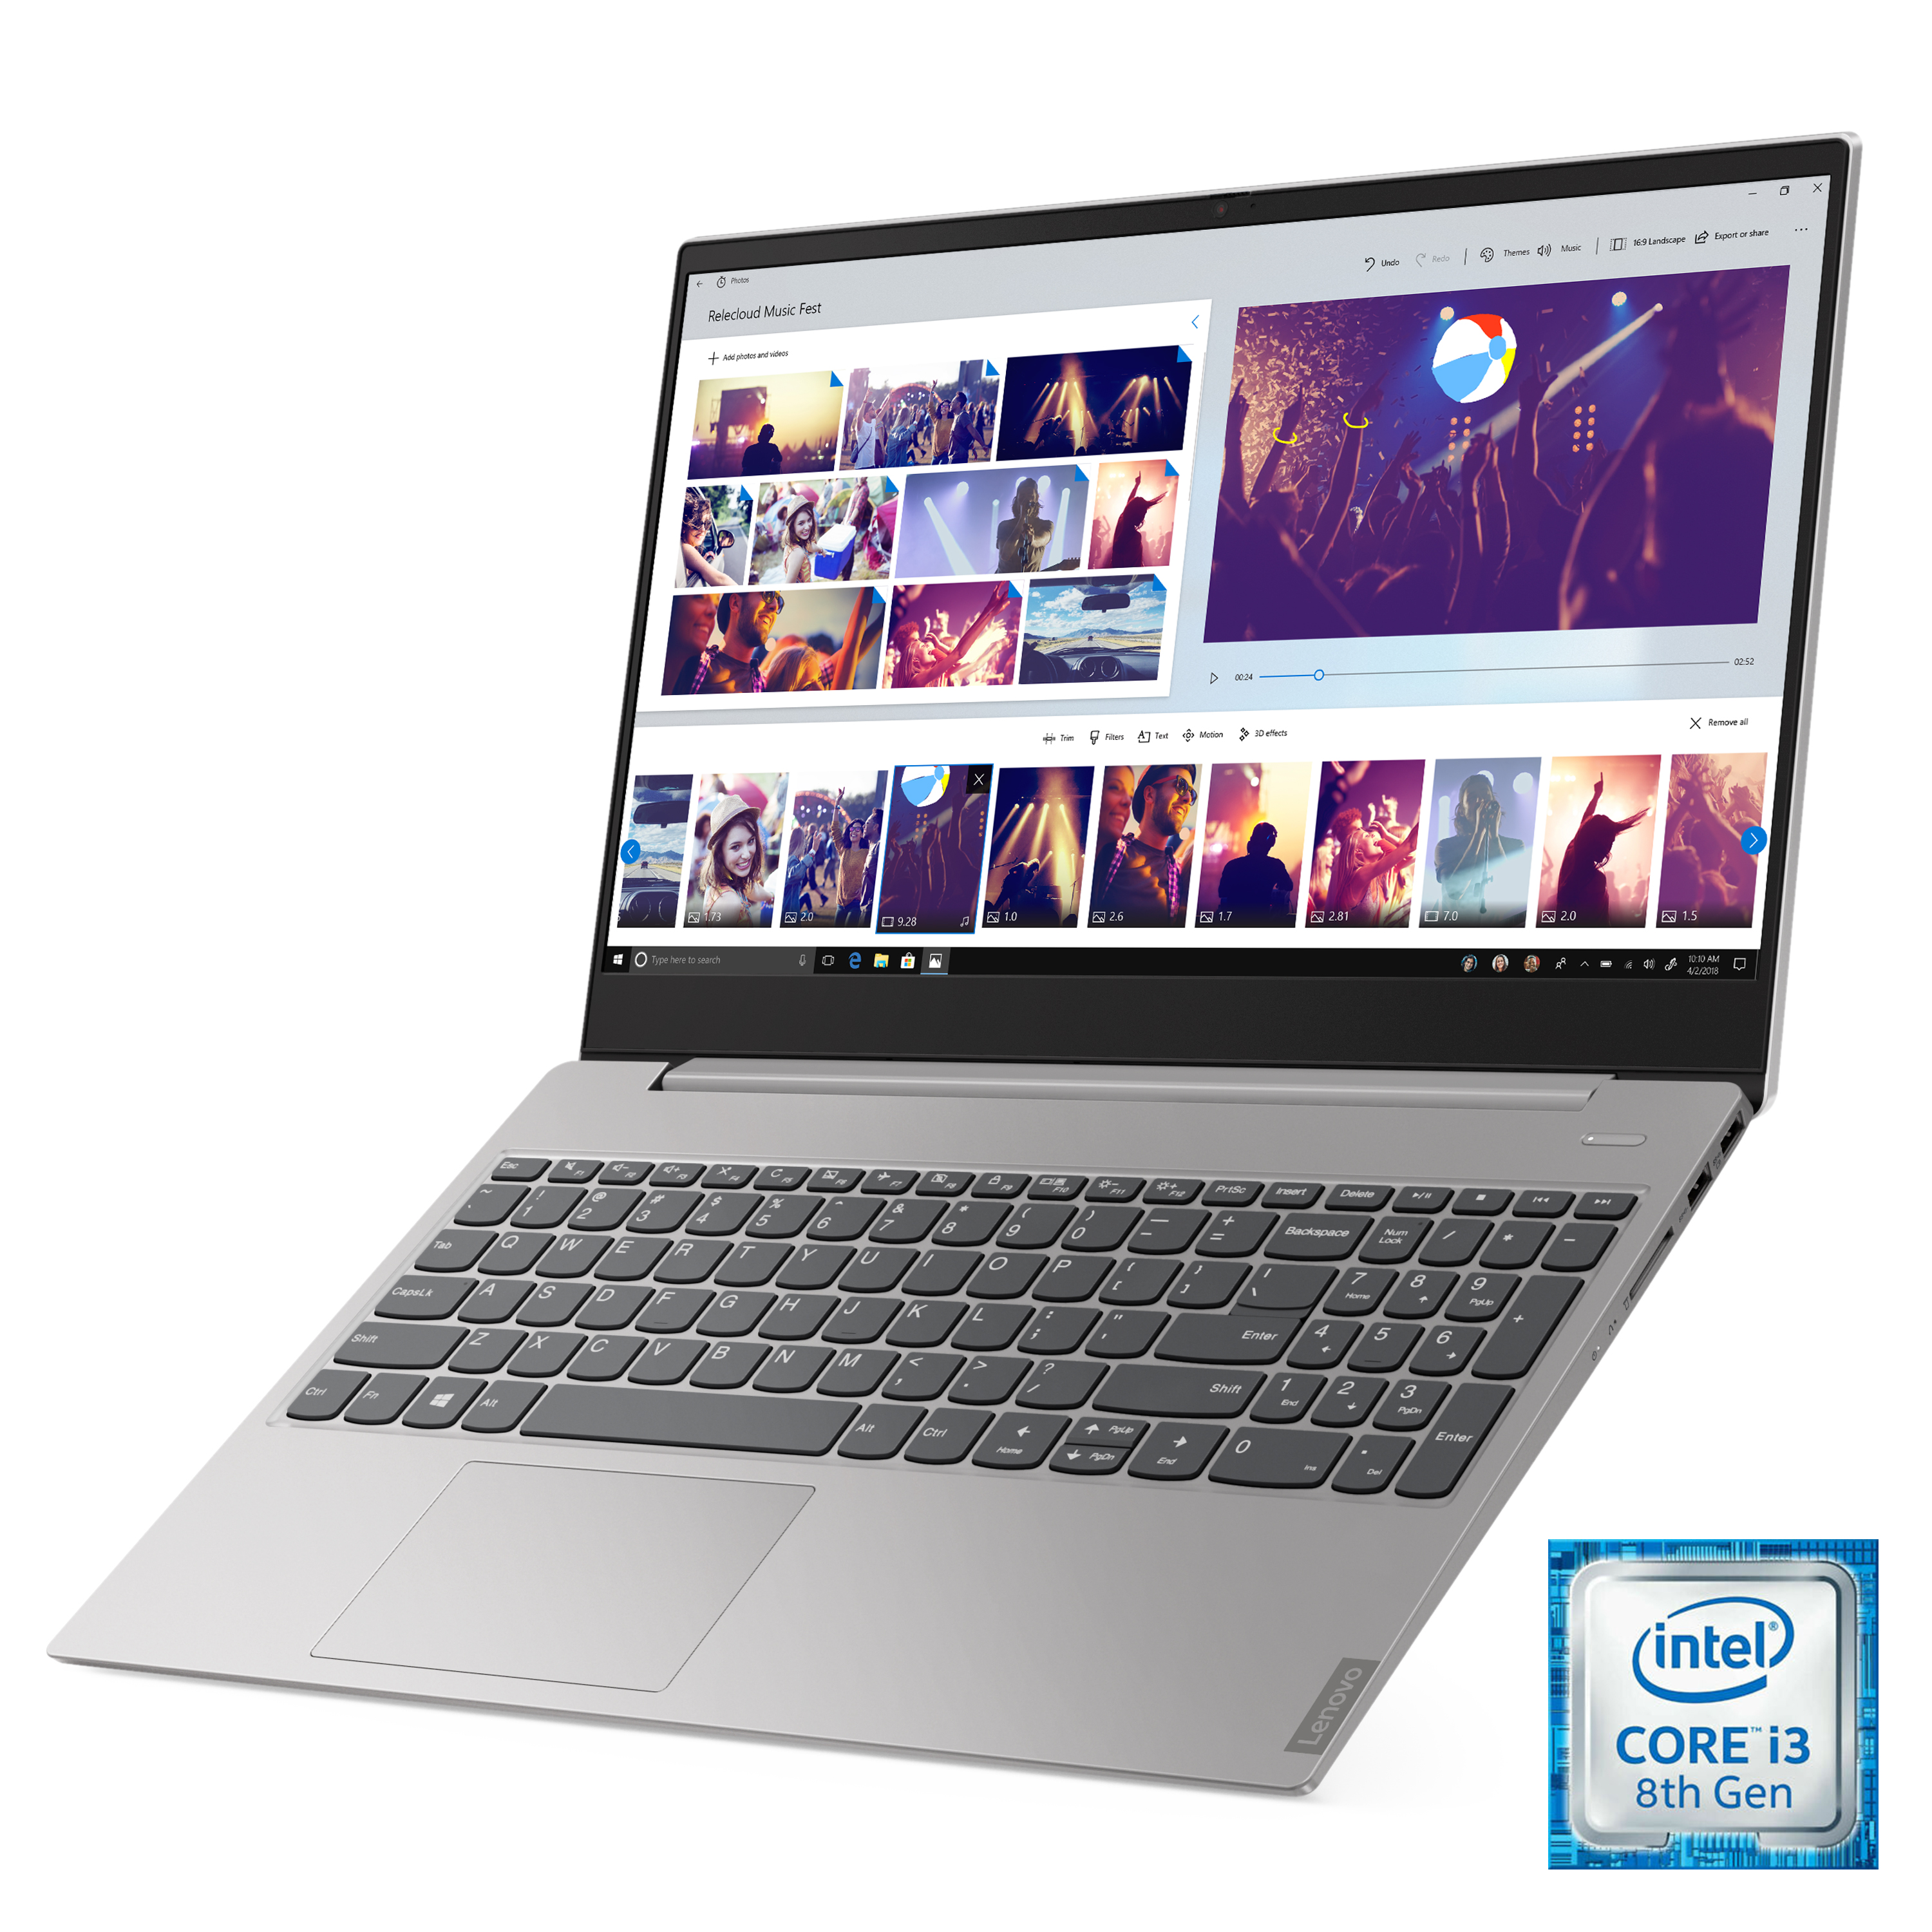 Lenovo ideapad S340 15.6" Laptop, Intel Core i3-8145U Dual-Core Processor, 8GB Memory, 128GB Solid State Drive, Windows 10 - Platinum Grey - 81N80092US - image 1 of 17